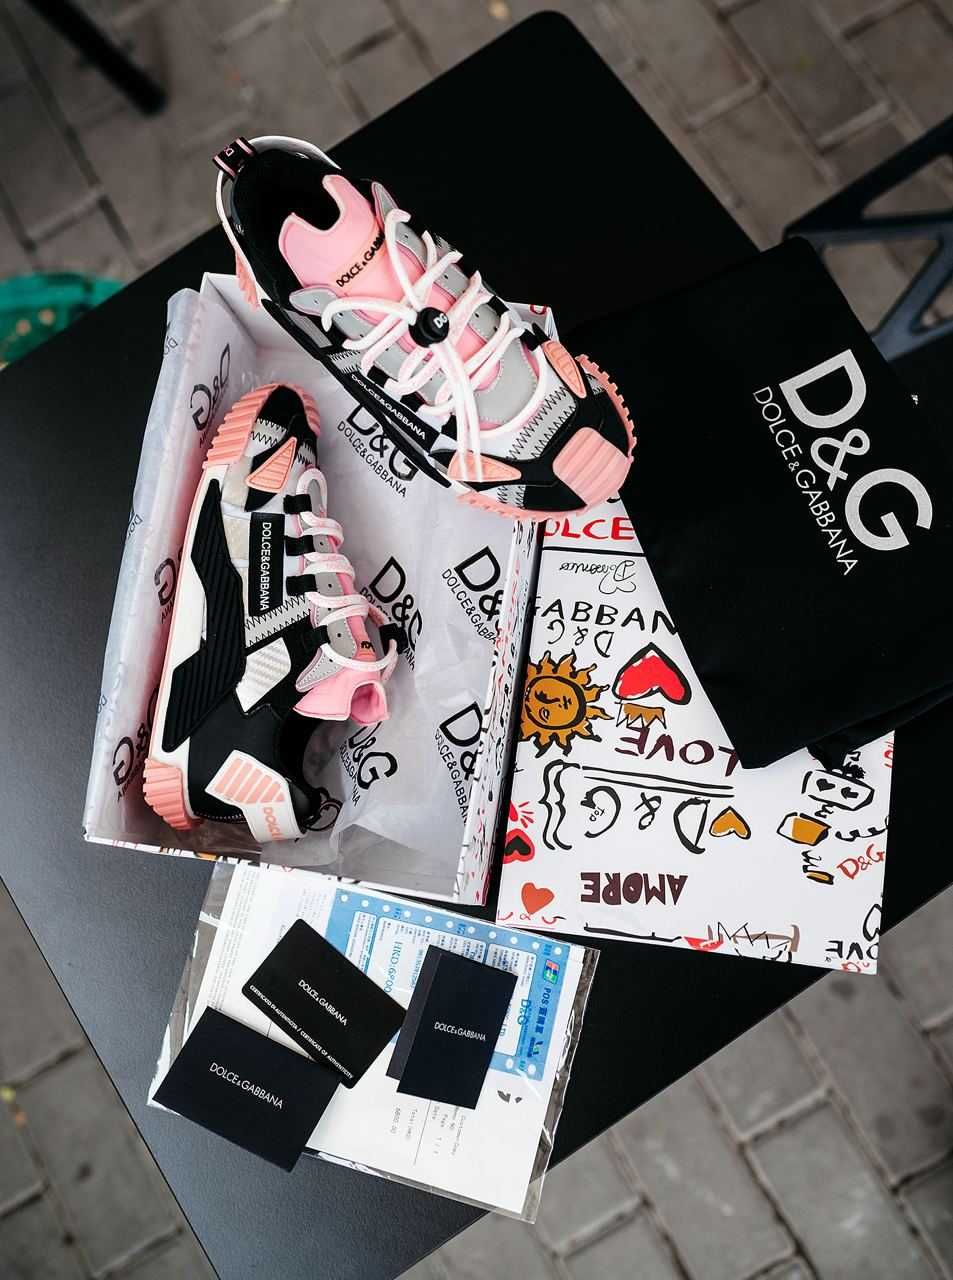 Sneakersy rózowe D&G - NS1 pink 36-38r